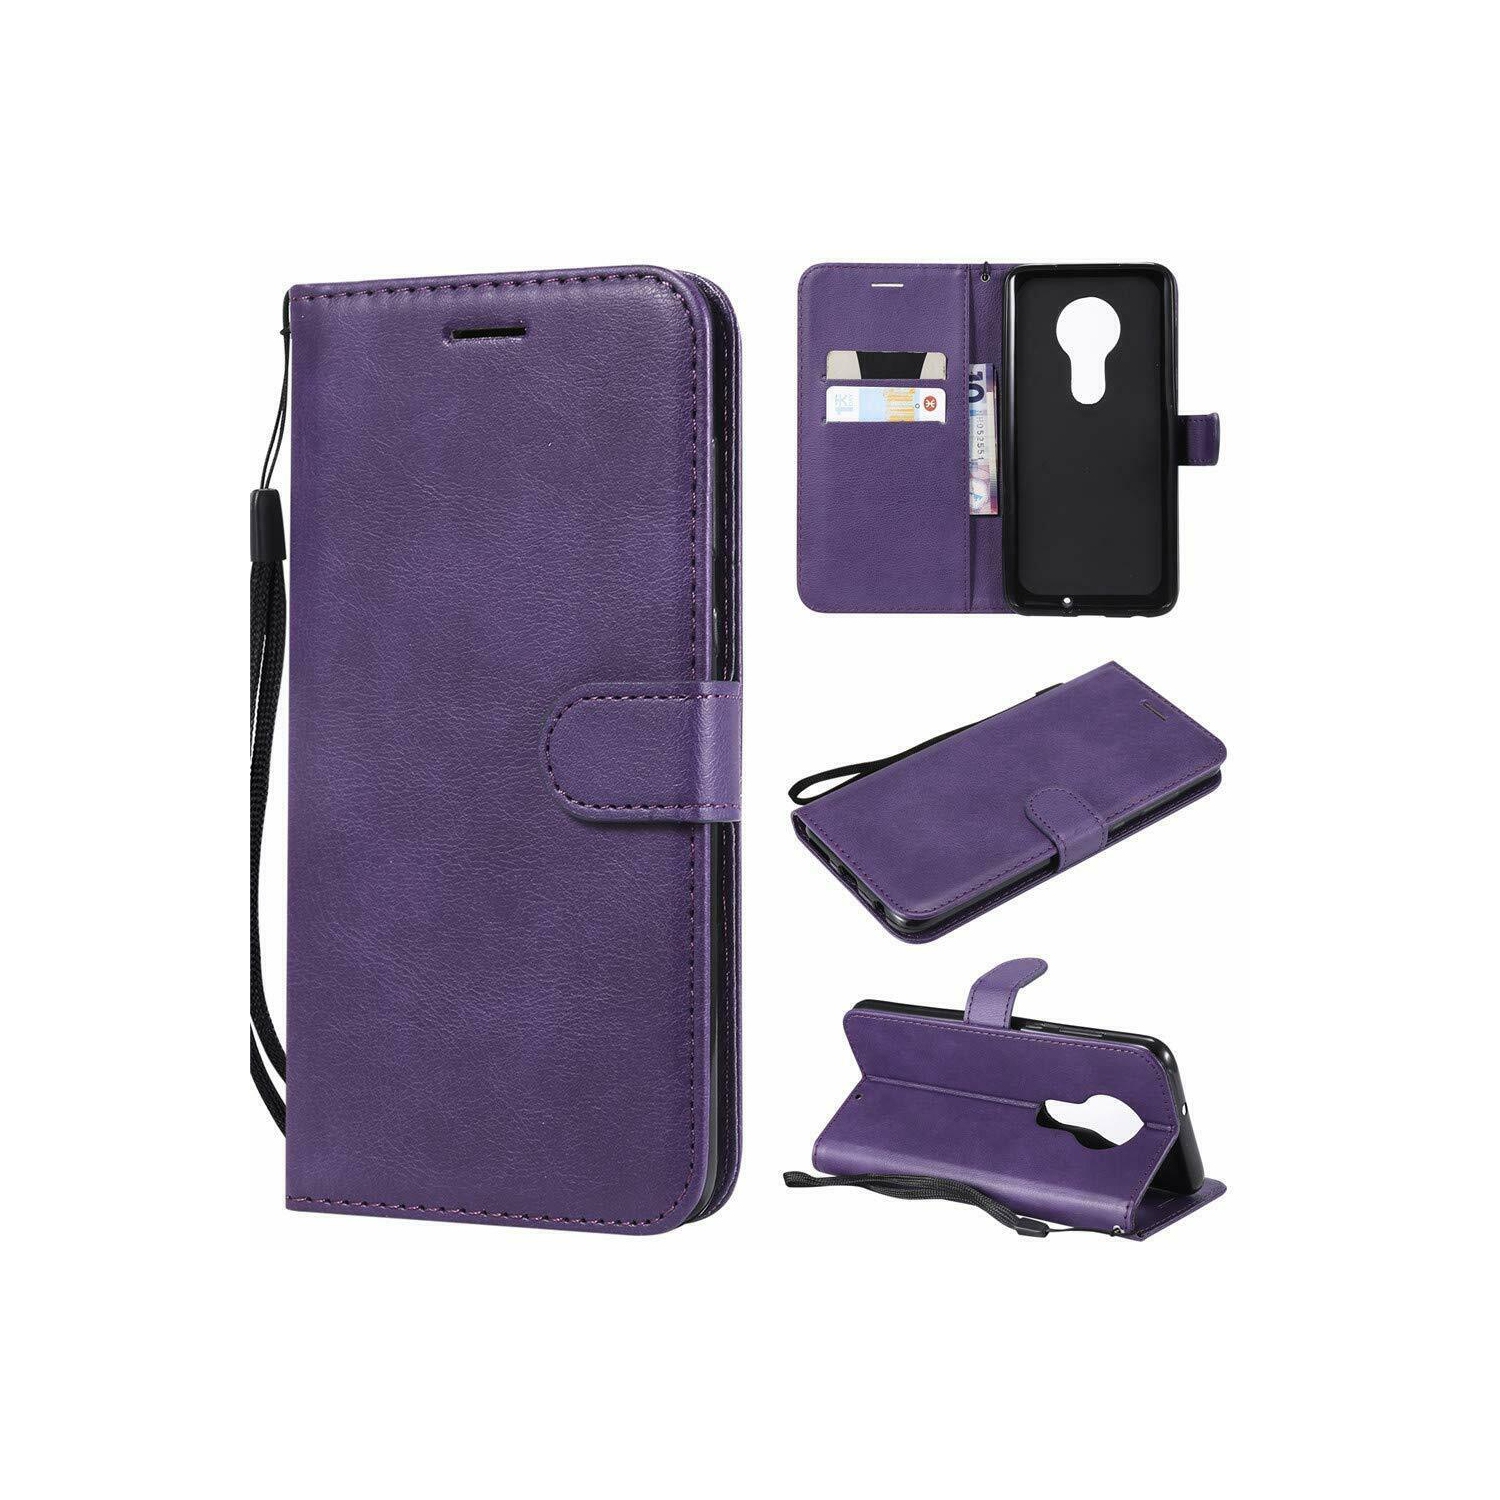 [CS] Motorola Moto G7 Power Case, Magnetic Leather Folio Wallet Flip Case Cover with Card Slot, Purple